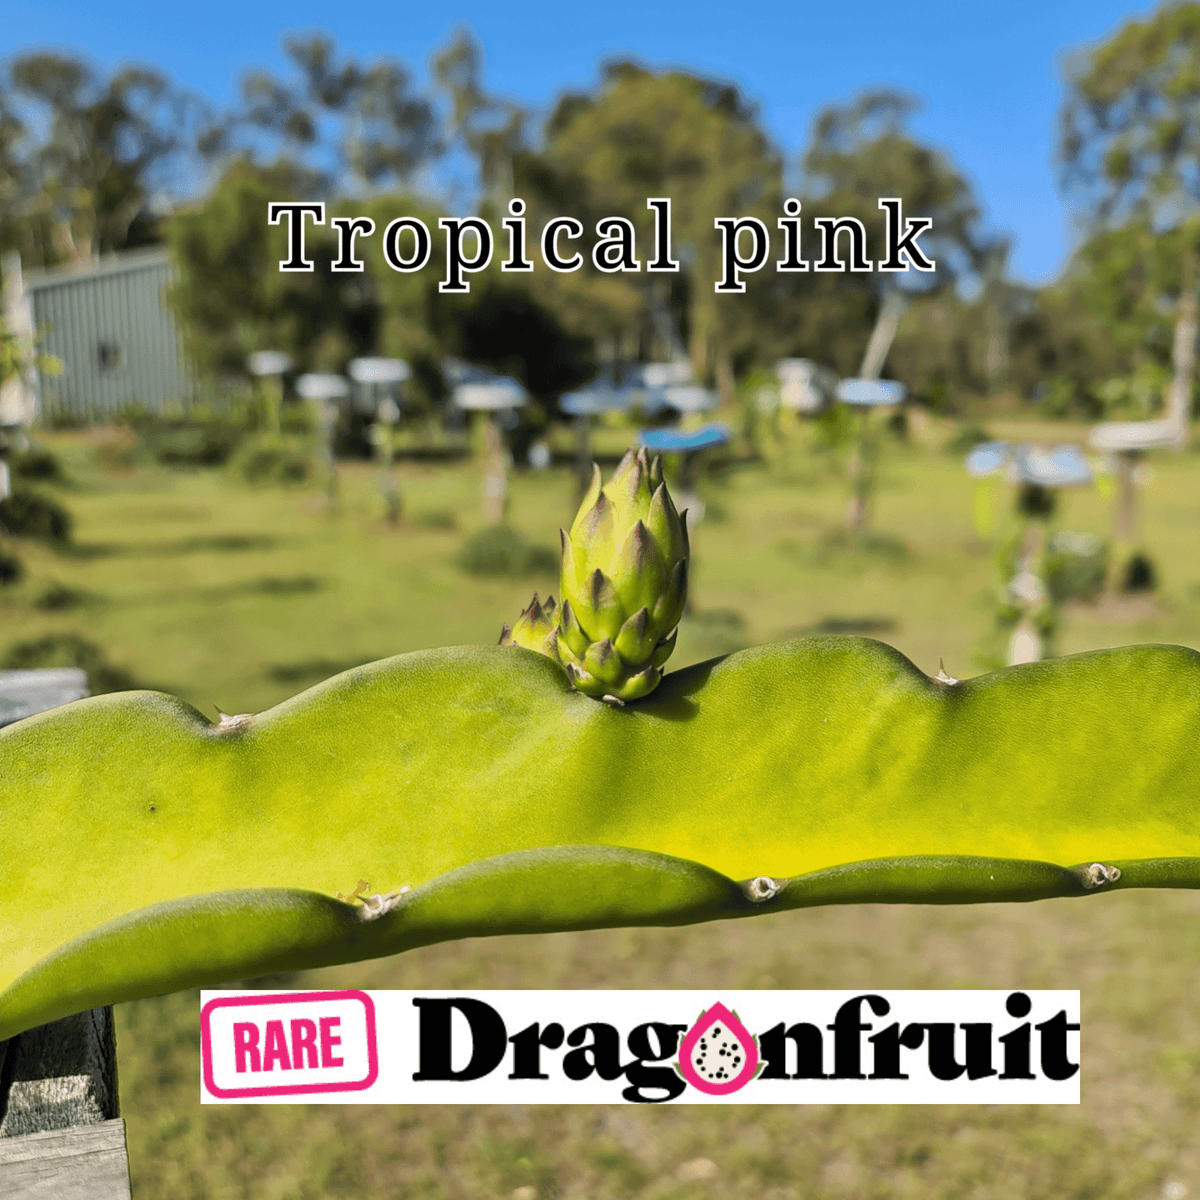 Tropical Pink Dragon Fruit Vanilla ice-cream flavour - Rare Dragon Fruit